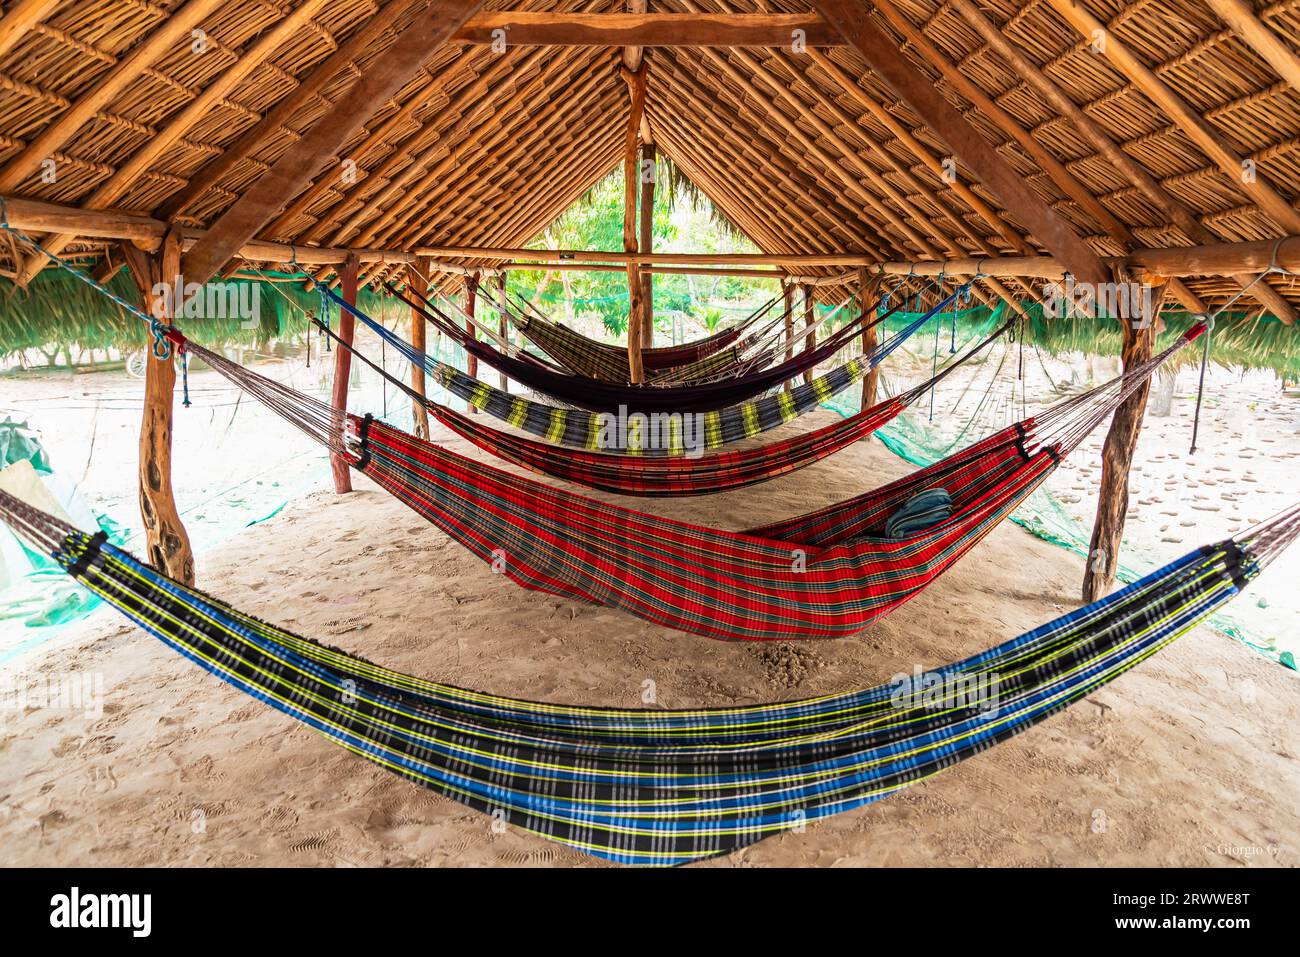 Hammocks hanging under rustic indigenous hut in Brazil Stock Photo